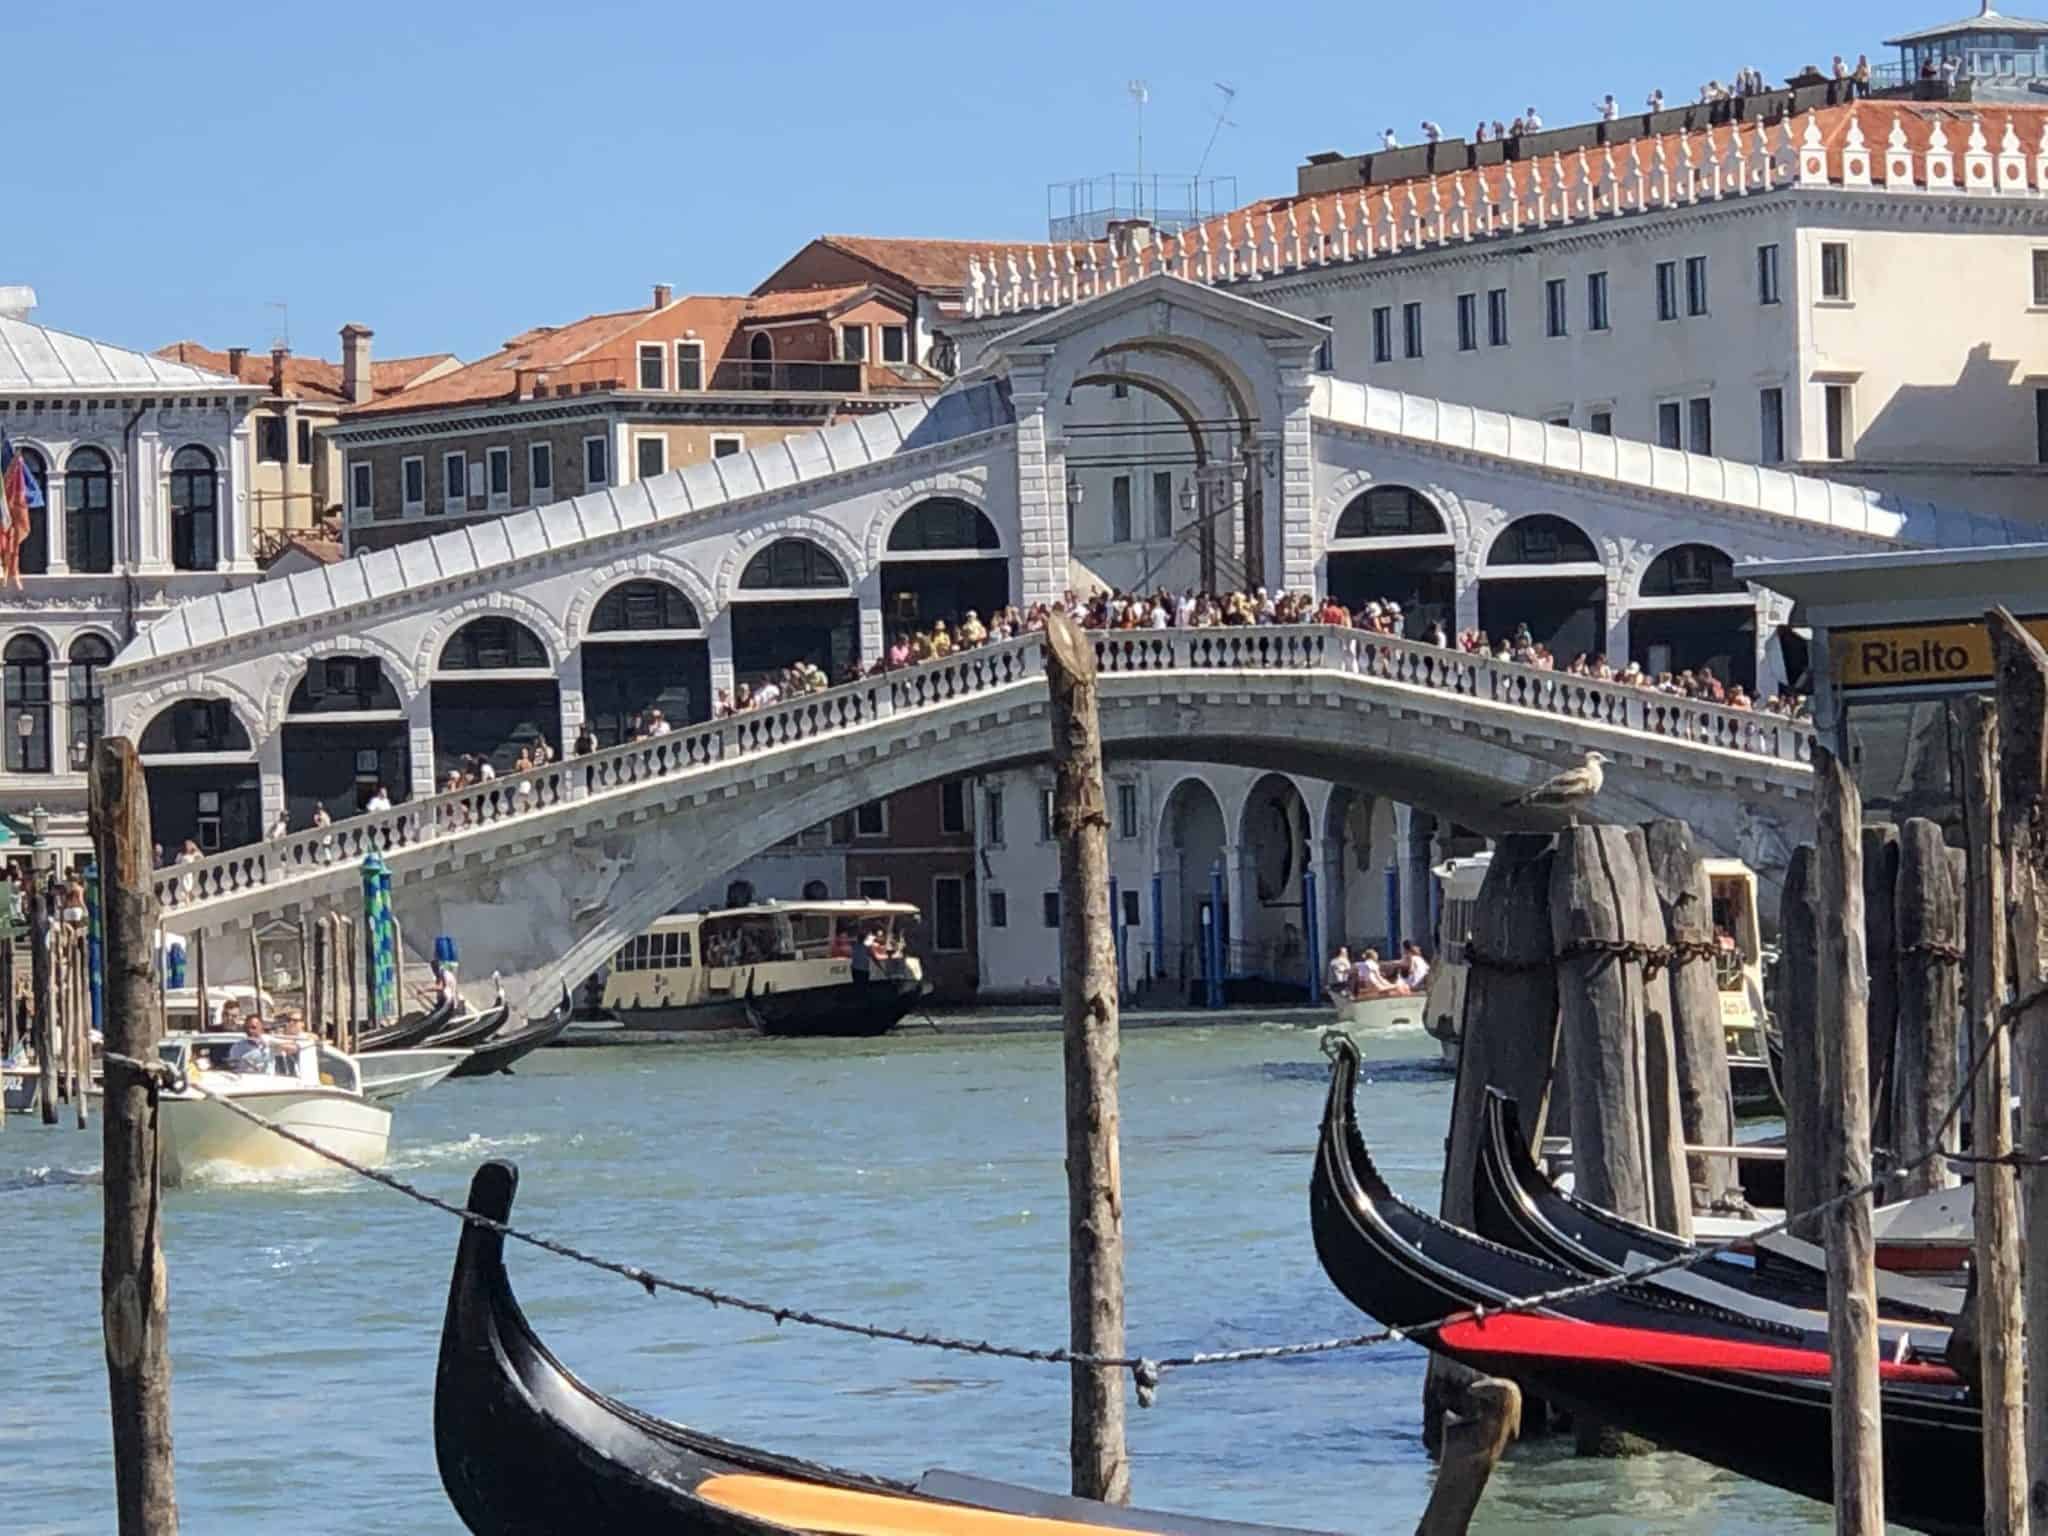 Realto bridge A Review of Our Venice and the Dalmatian